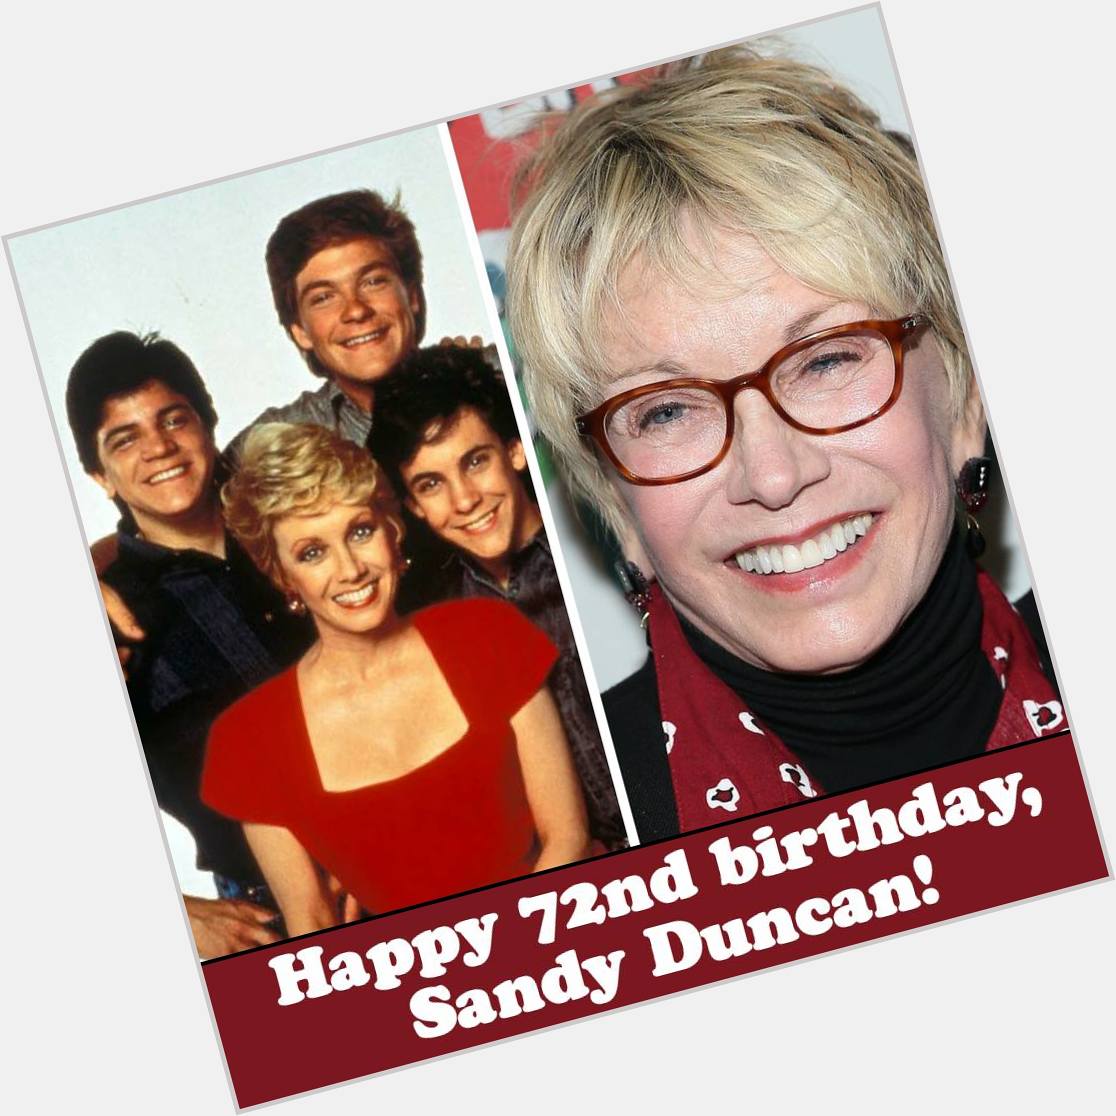 Happy birthday to Sandy Duncan 